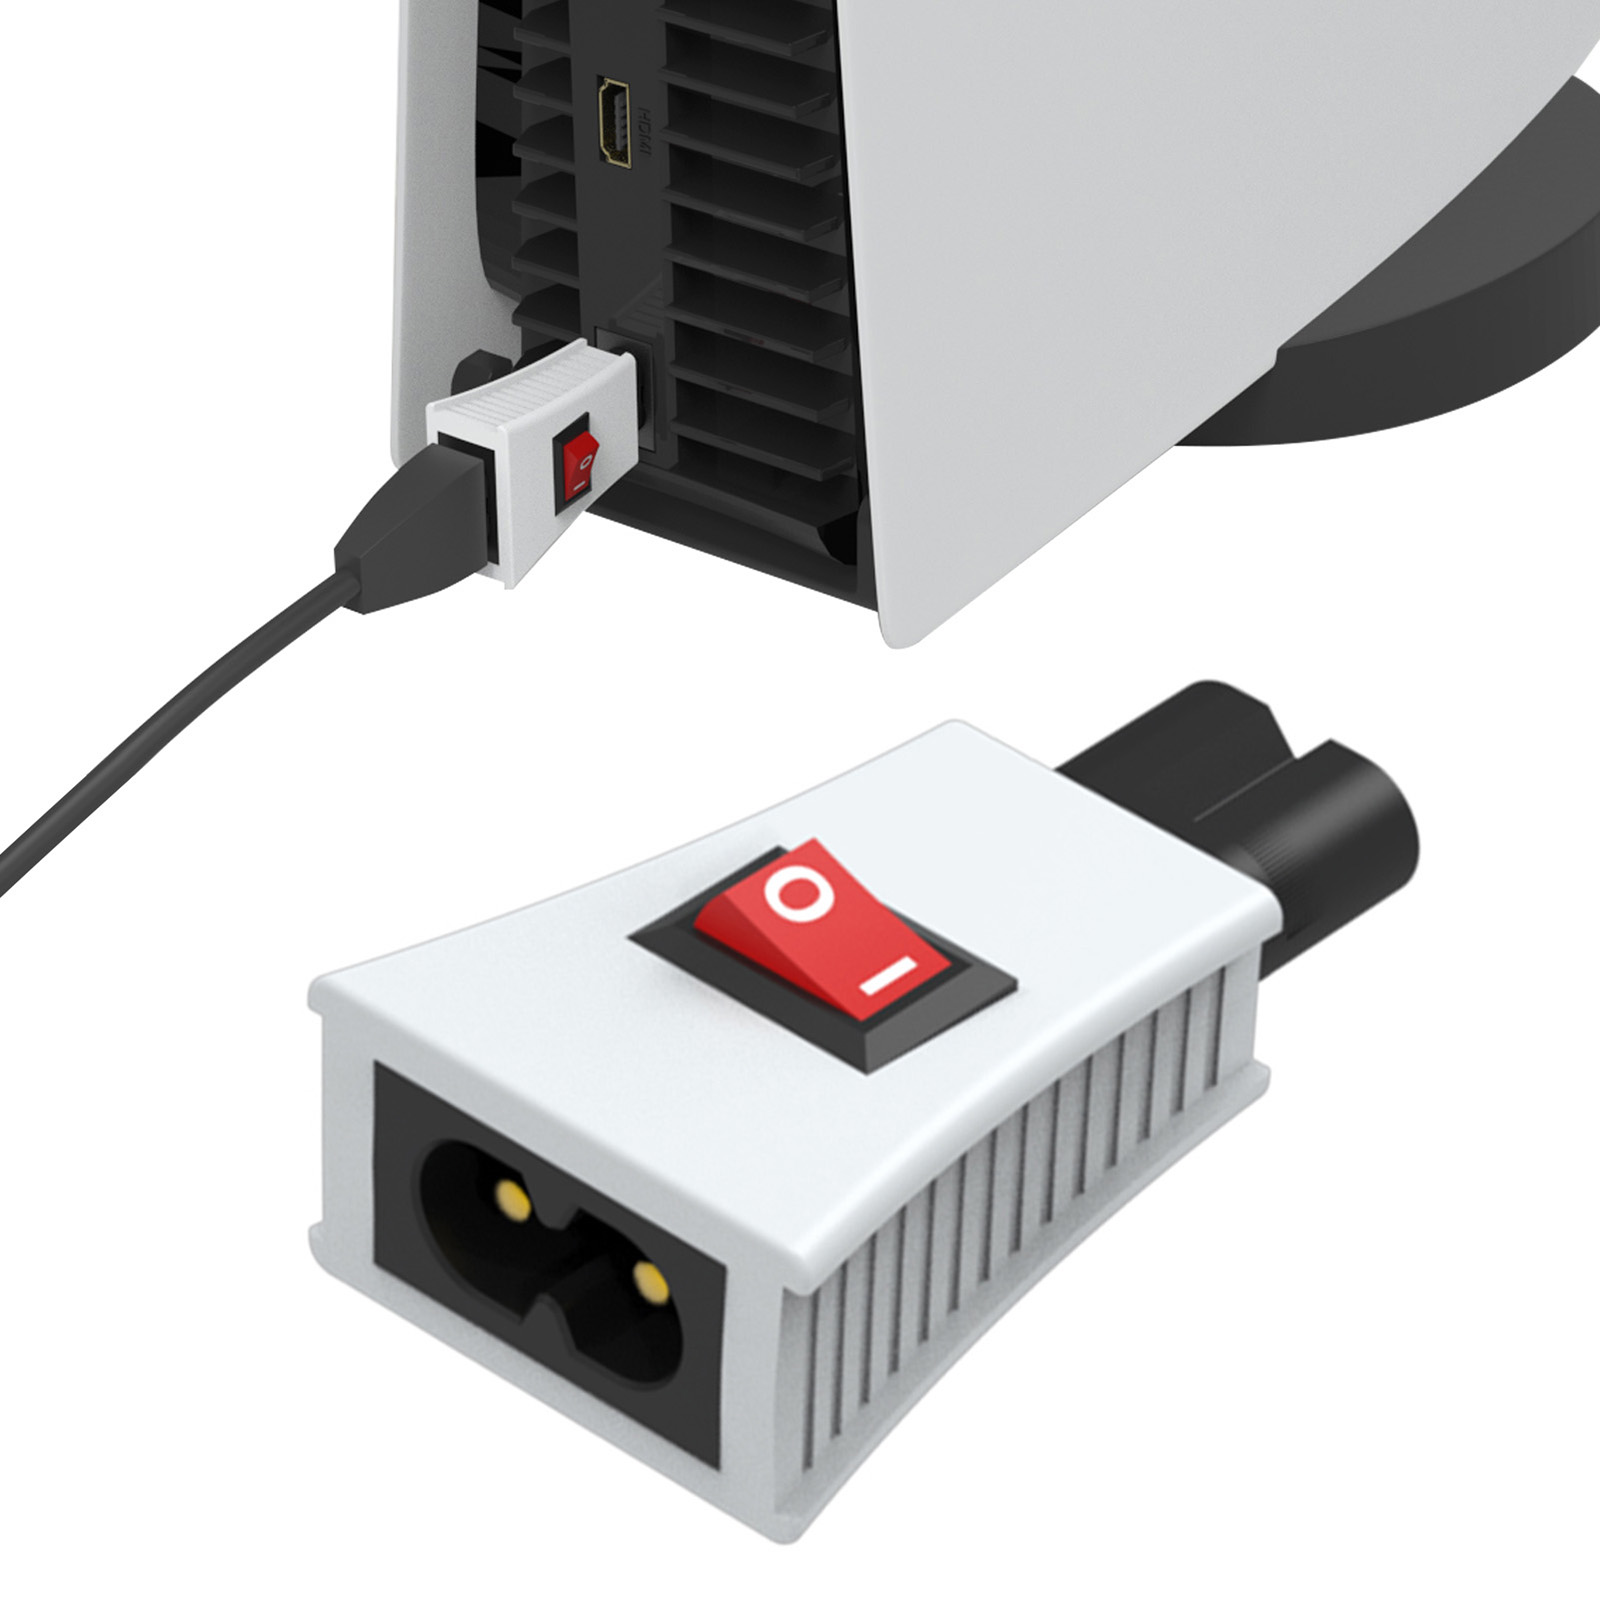 PS5 / PS4 / PS3 / Xbox Seriesxホスト電源スイッチ保護デバイスと互換性のある電源オン/オフボタンアダプター